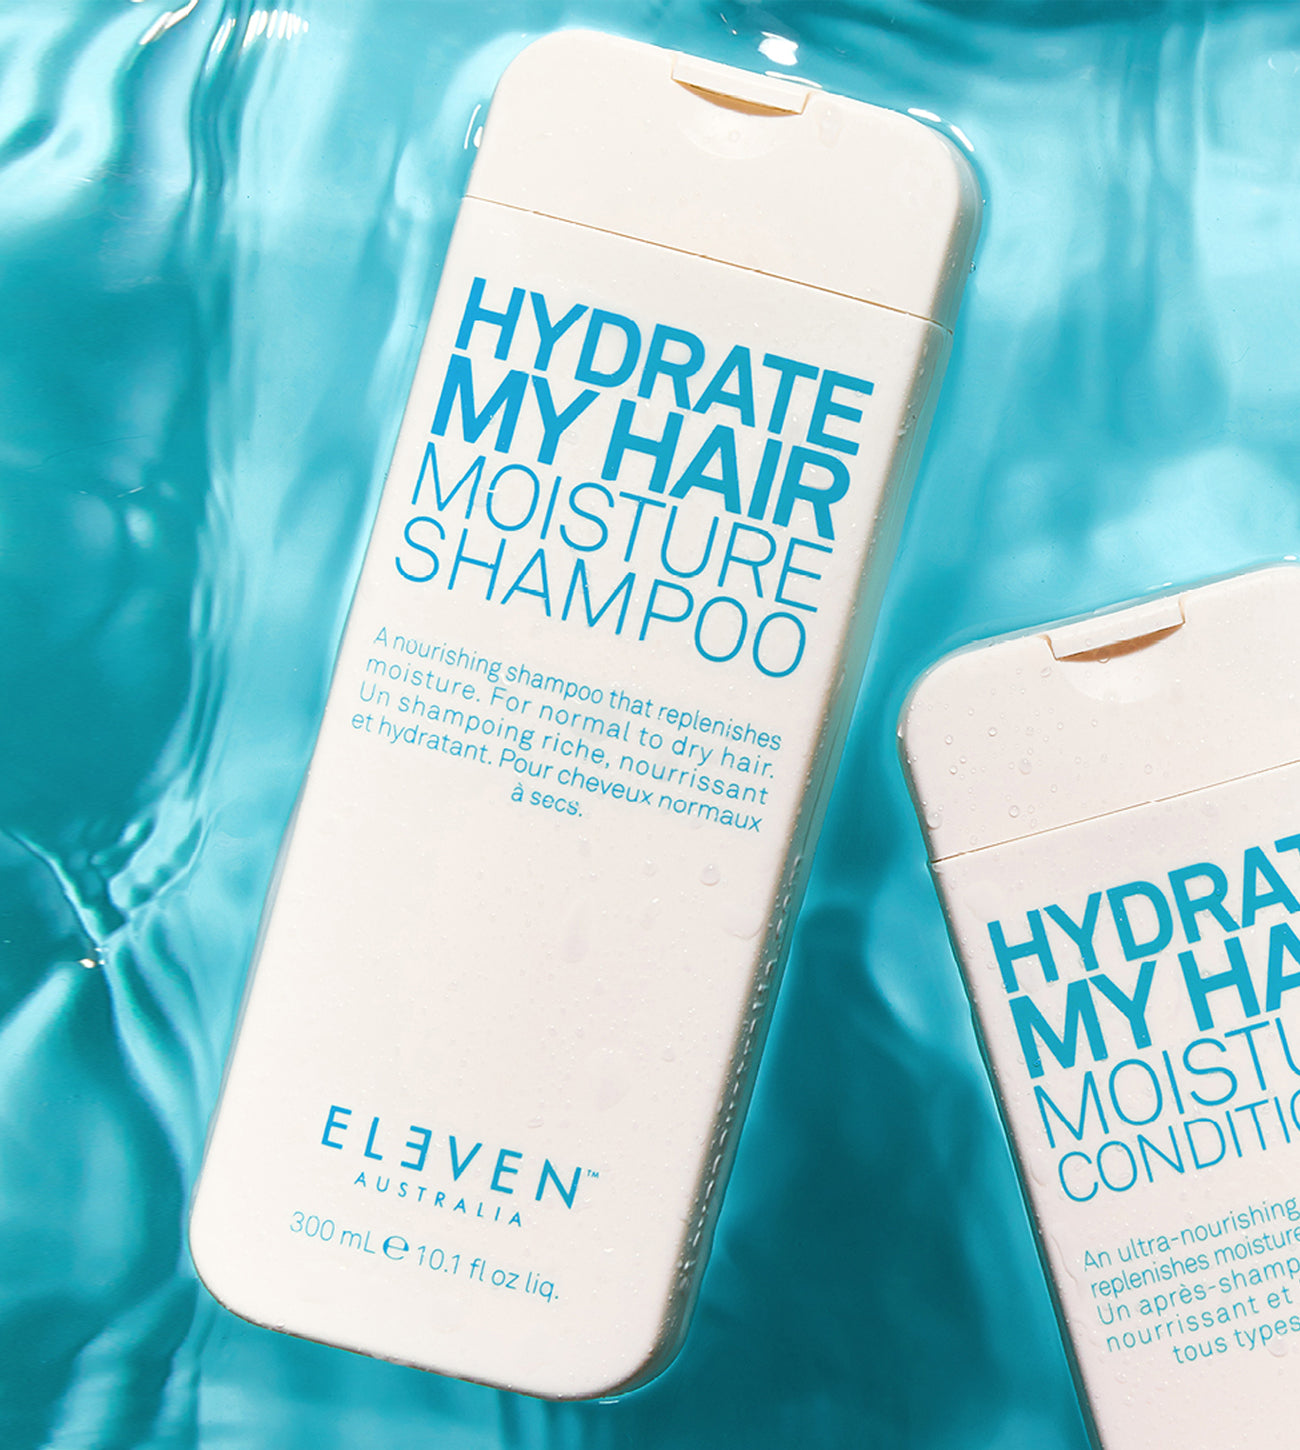 ELEVEN Australia HYDRATE MY HAIR MOISTURE SHAMPOO nourishing replenish moisture for normal to dry hair hydration products ELEVEN Shampoo